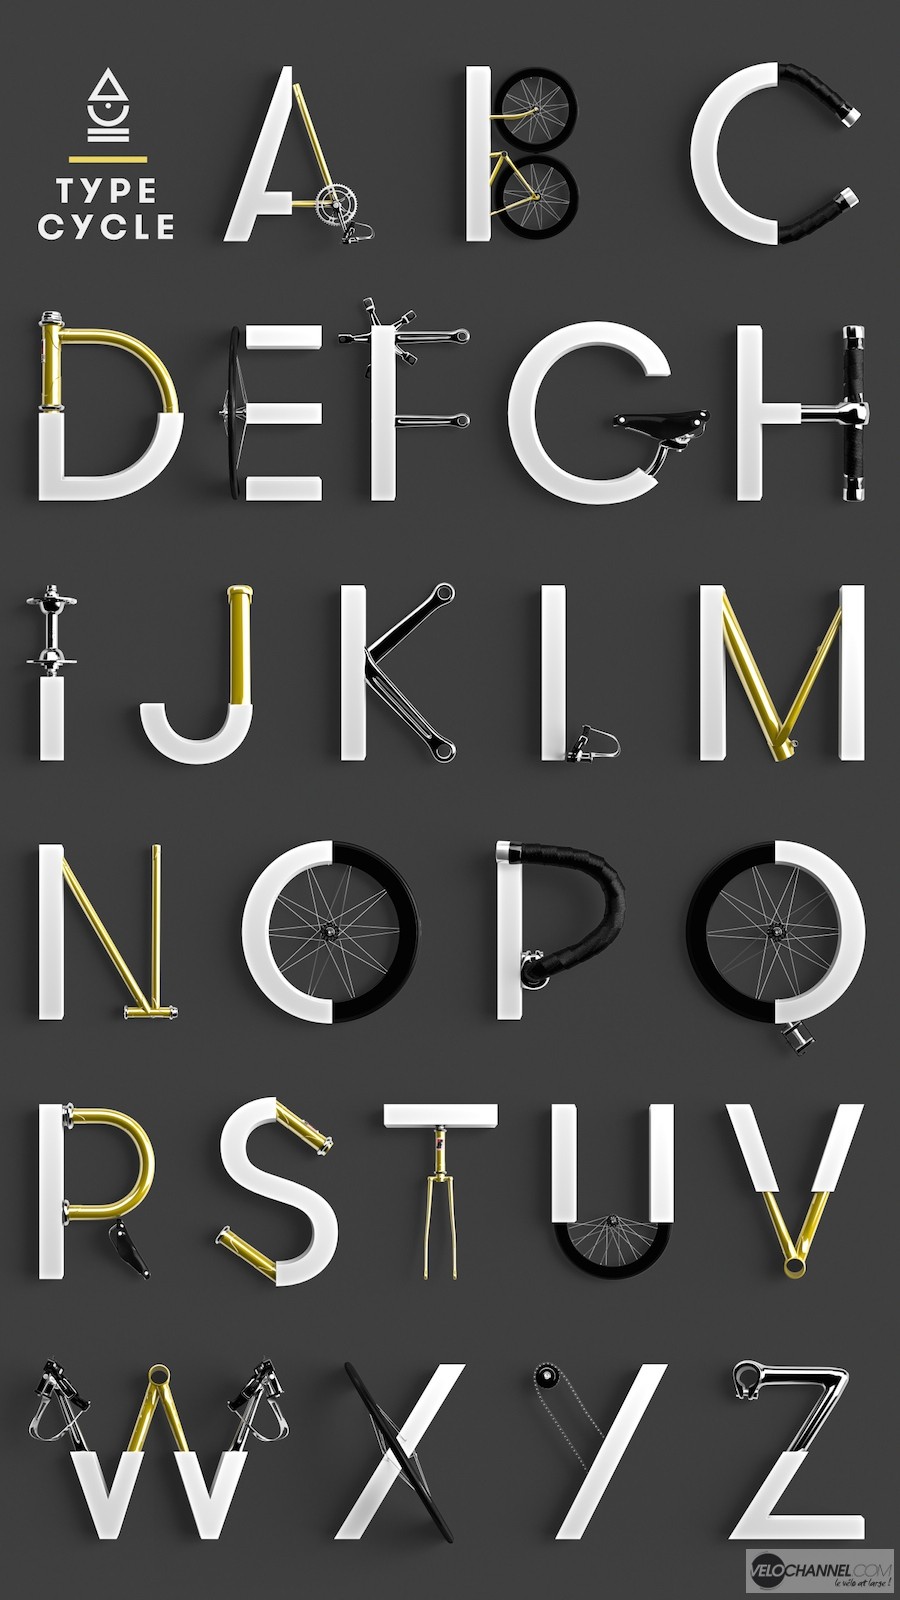 typecycle-alphabet-complet